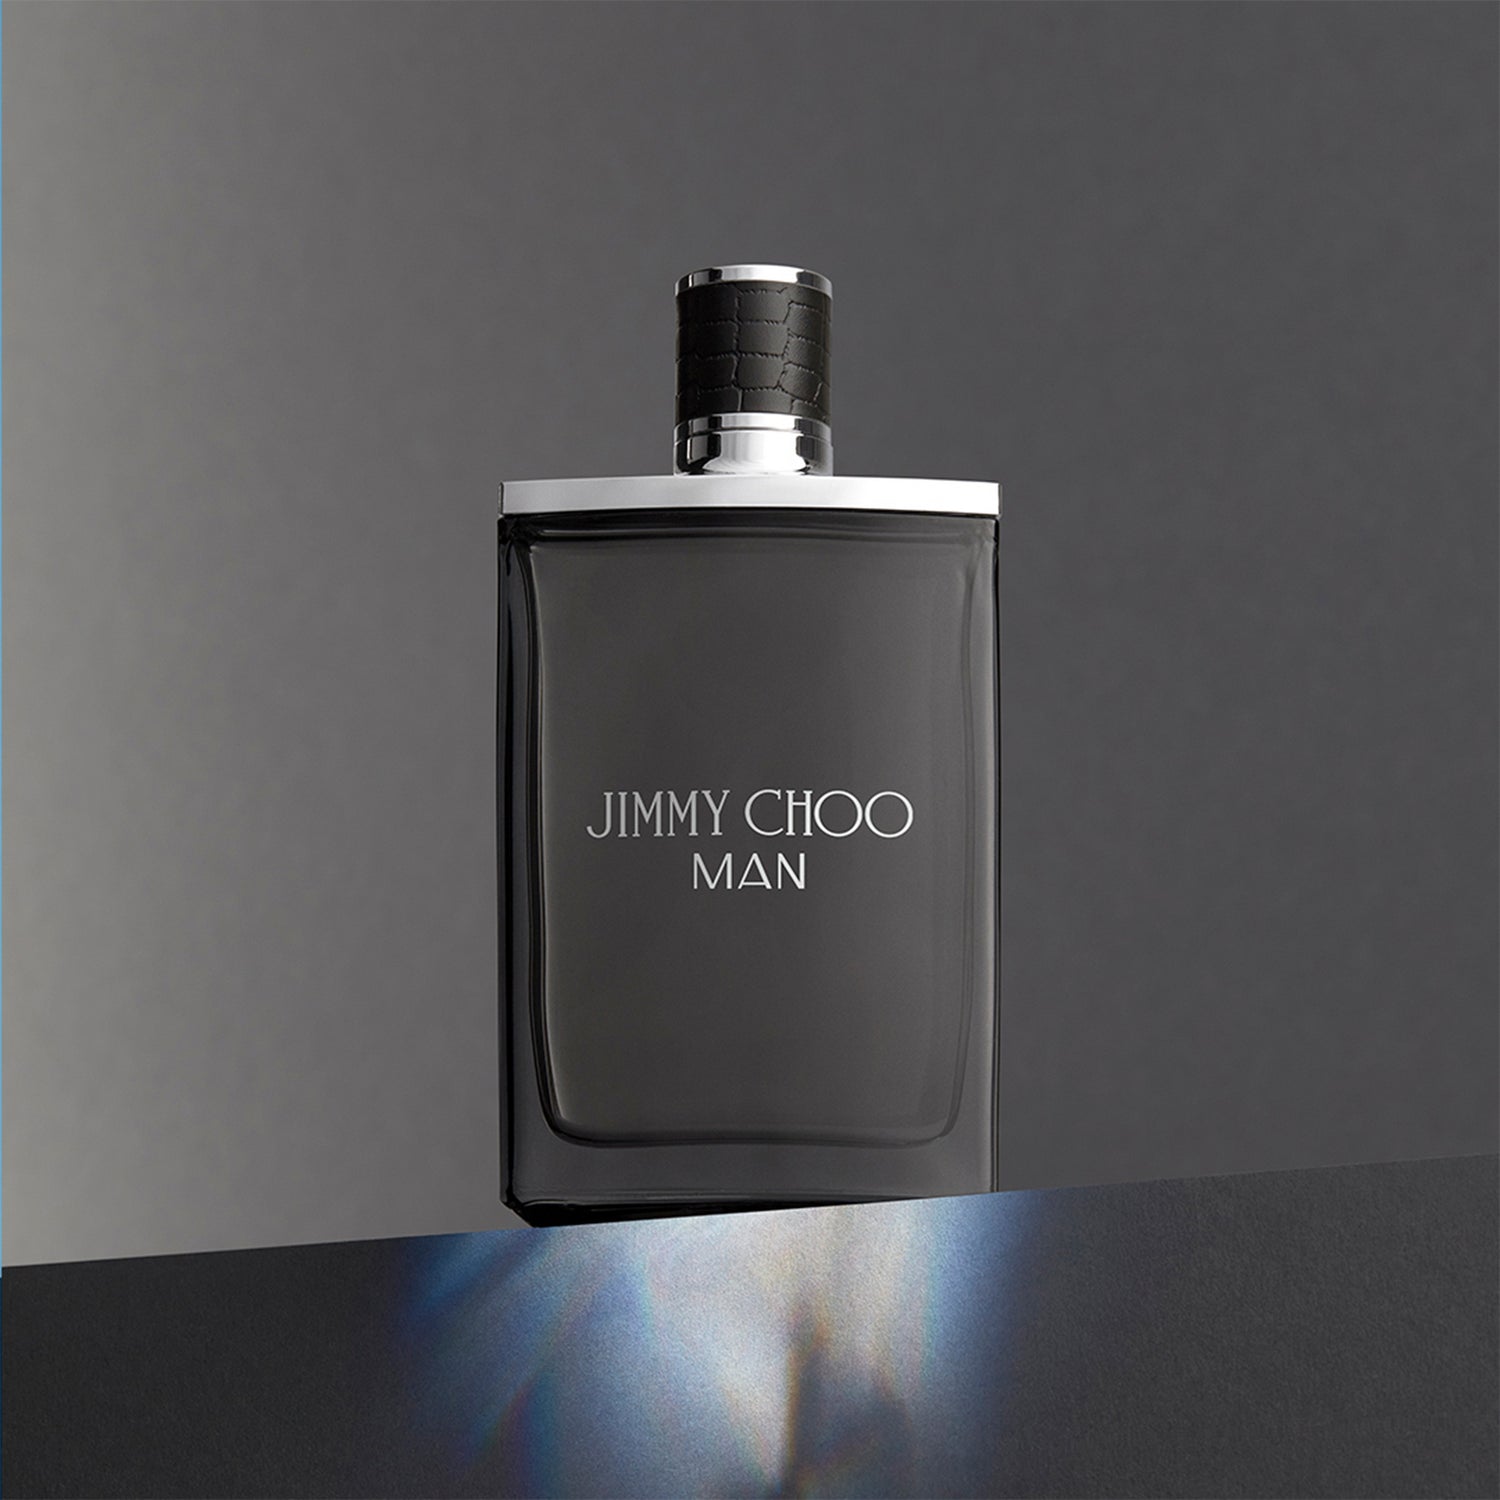 JIMMY CHOO MAN EDT 50ML 2 PIECE SET Perfume